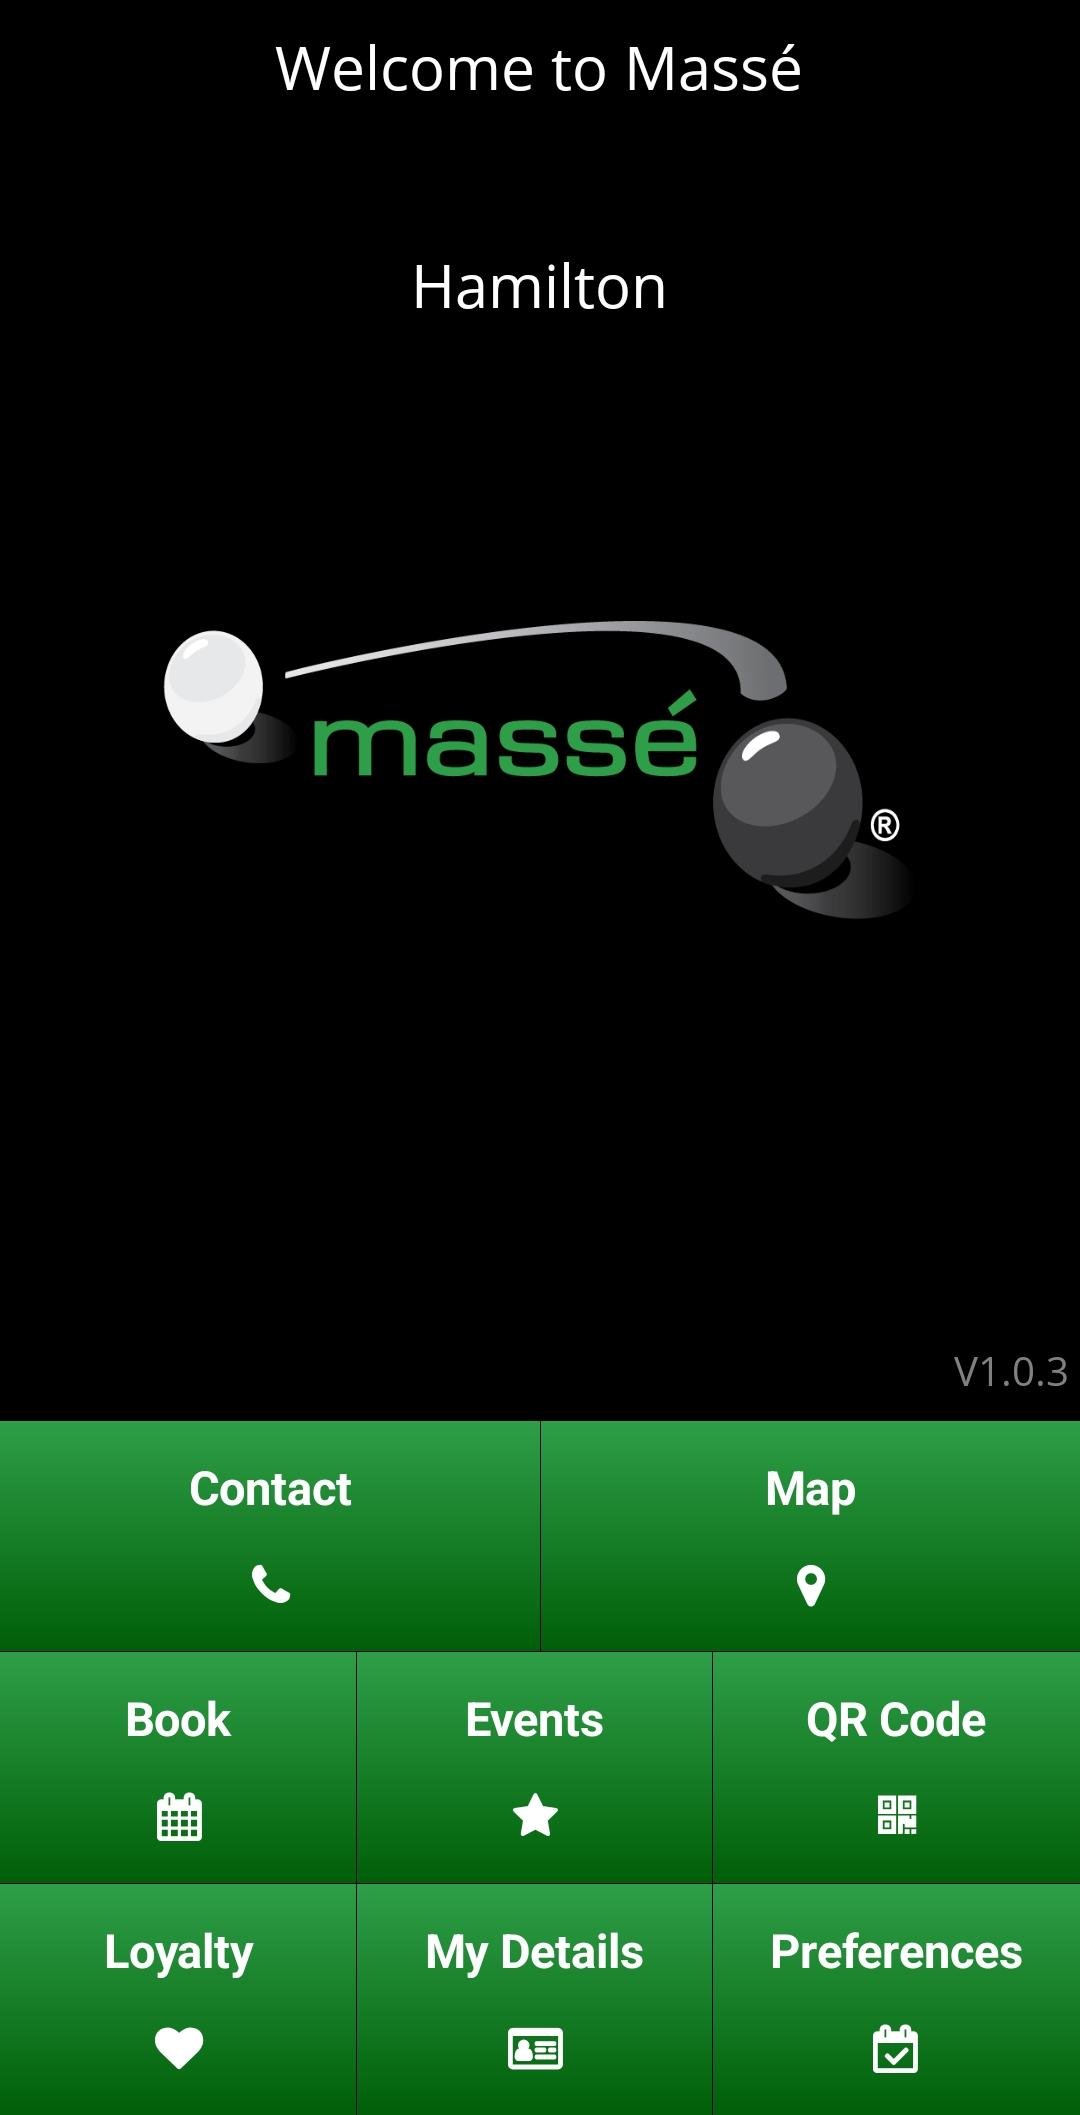 shows home screen from Massé app